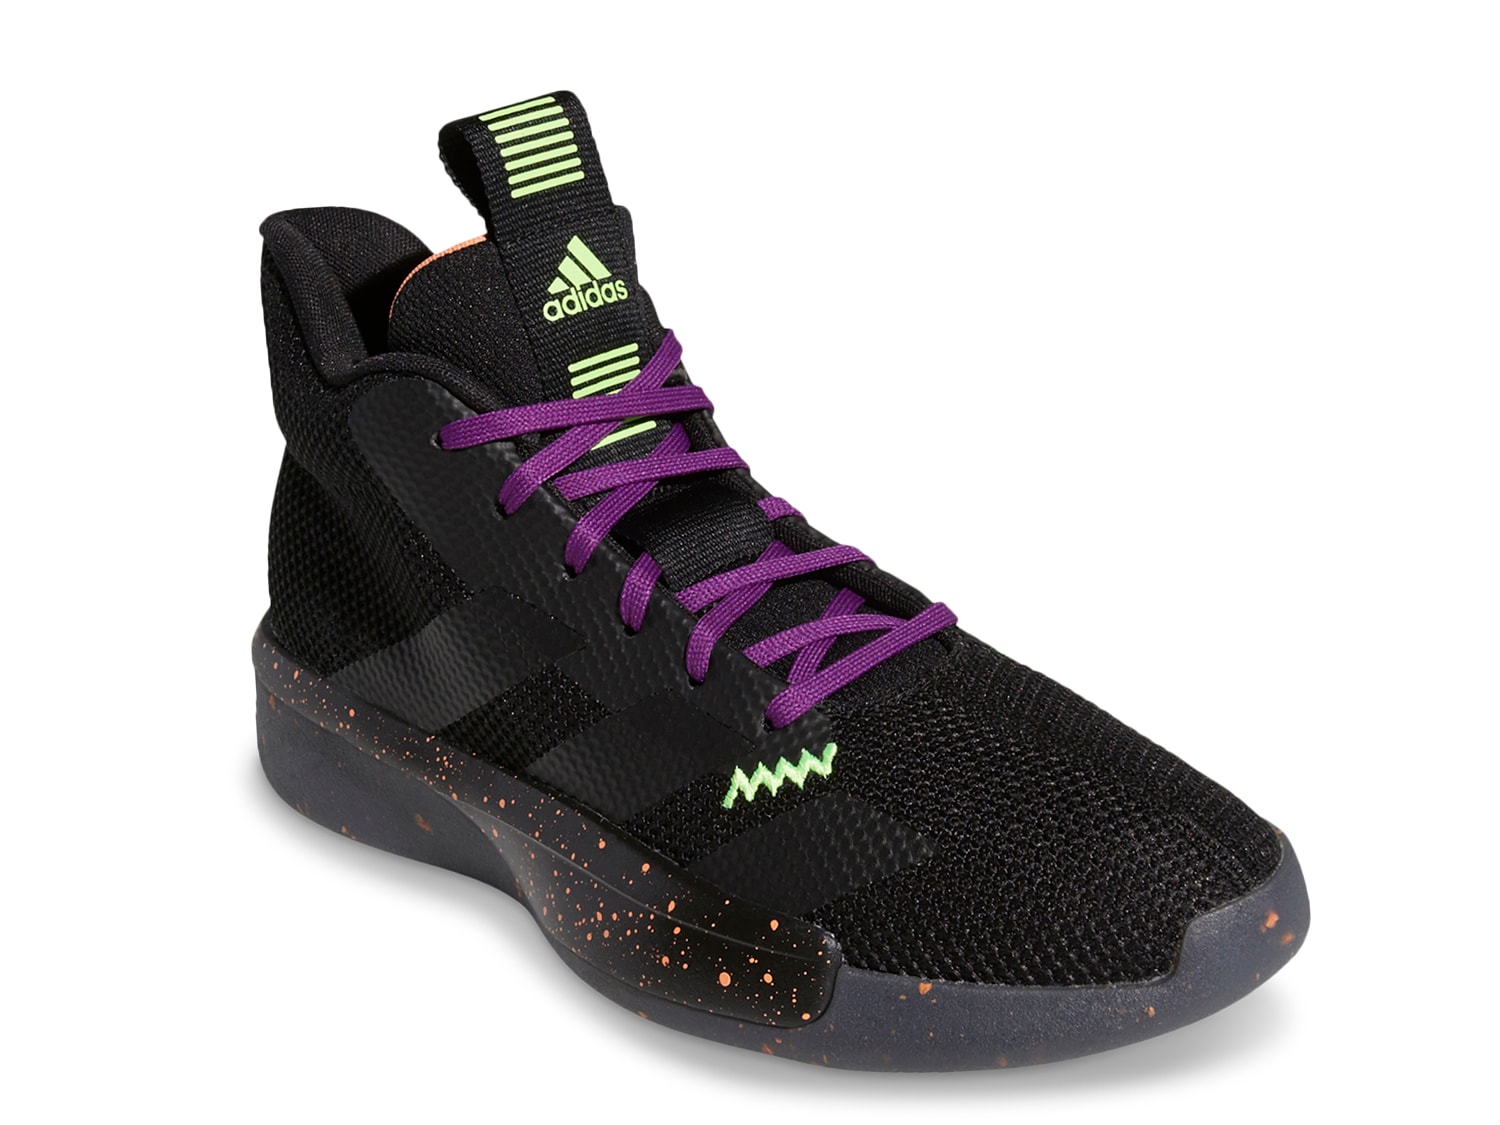 adidas men's pro next 2019 basketball shoes